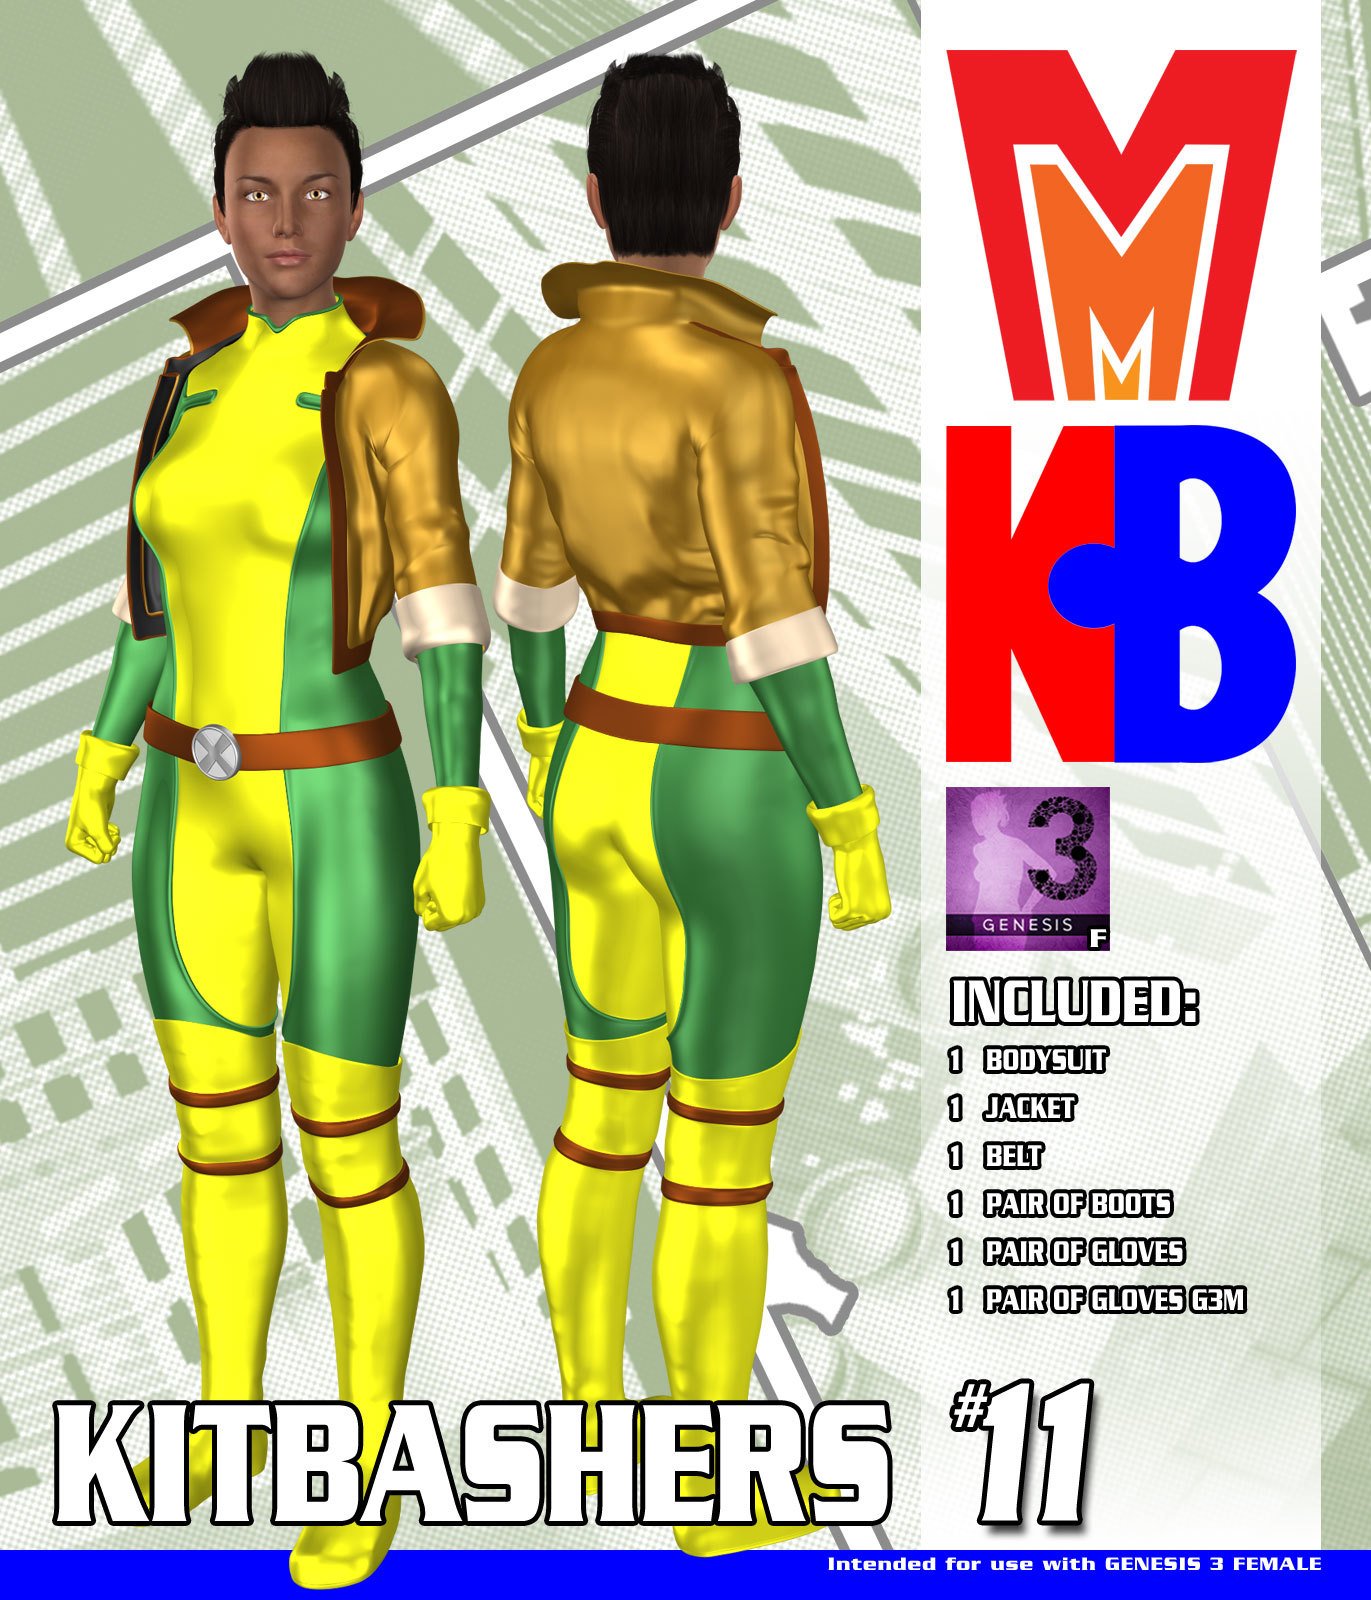 Kitbashers 011 MMG3F by: MightyMite, 3D Models by Daz 3D